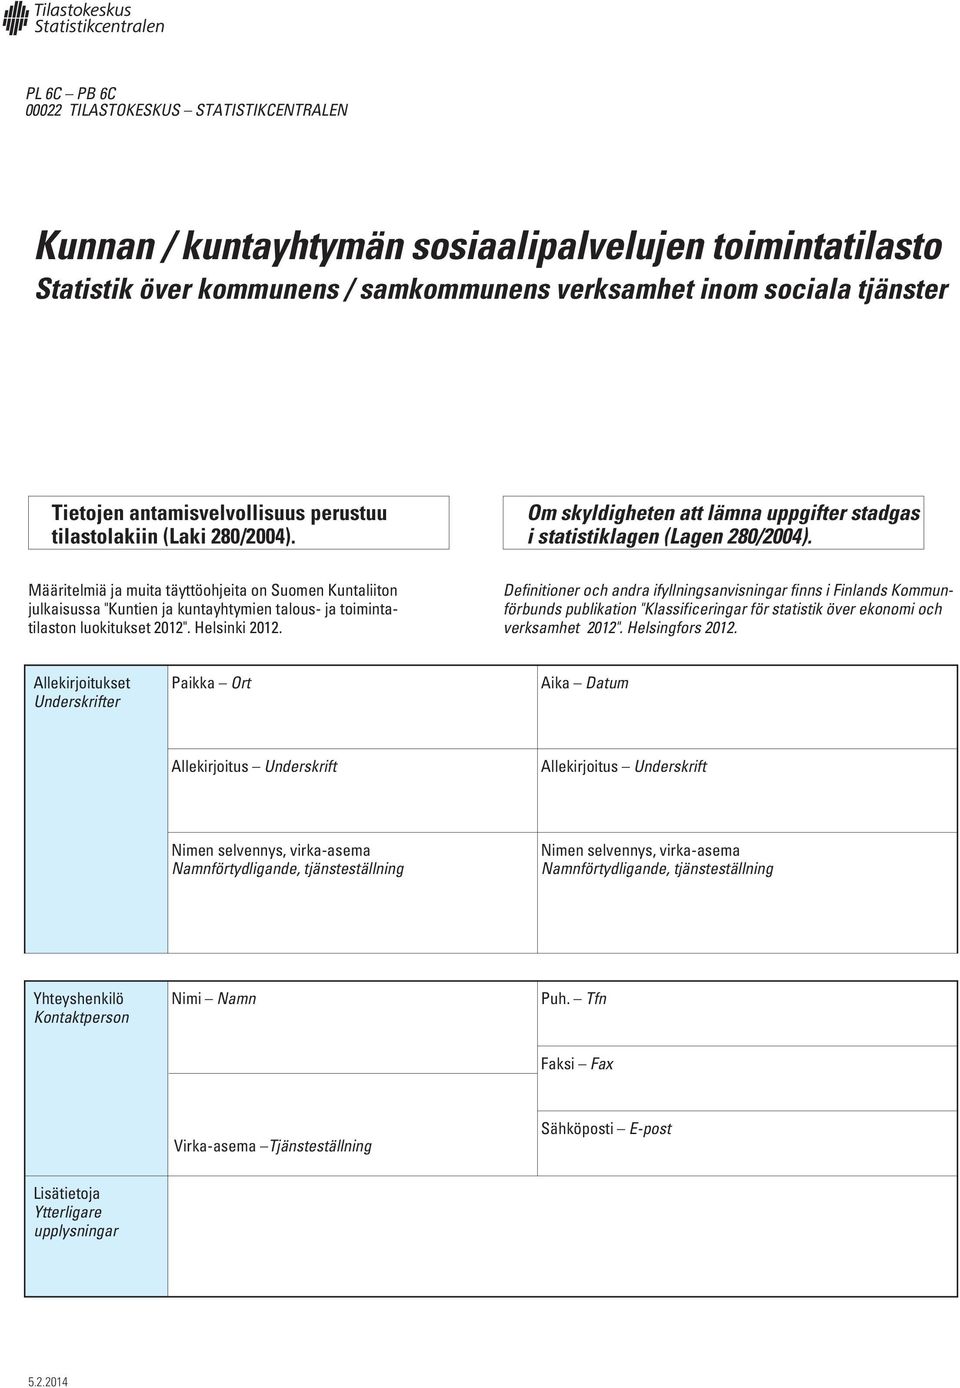 Om skyldigheten att lämna uppgifter stadgas i statistiklagen (Lagen 280/2004). Suomen Kuntaliiton julkaisussa "Kuntien ja luokitukset 2012". Helsinki 2012.